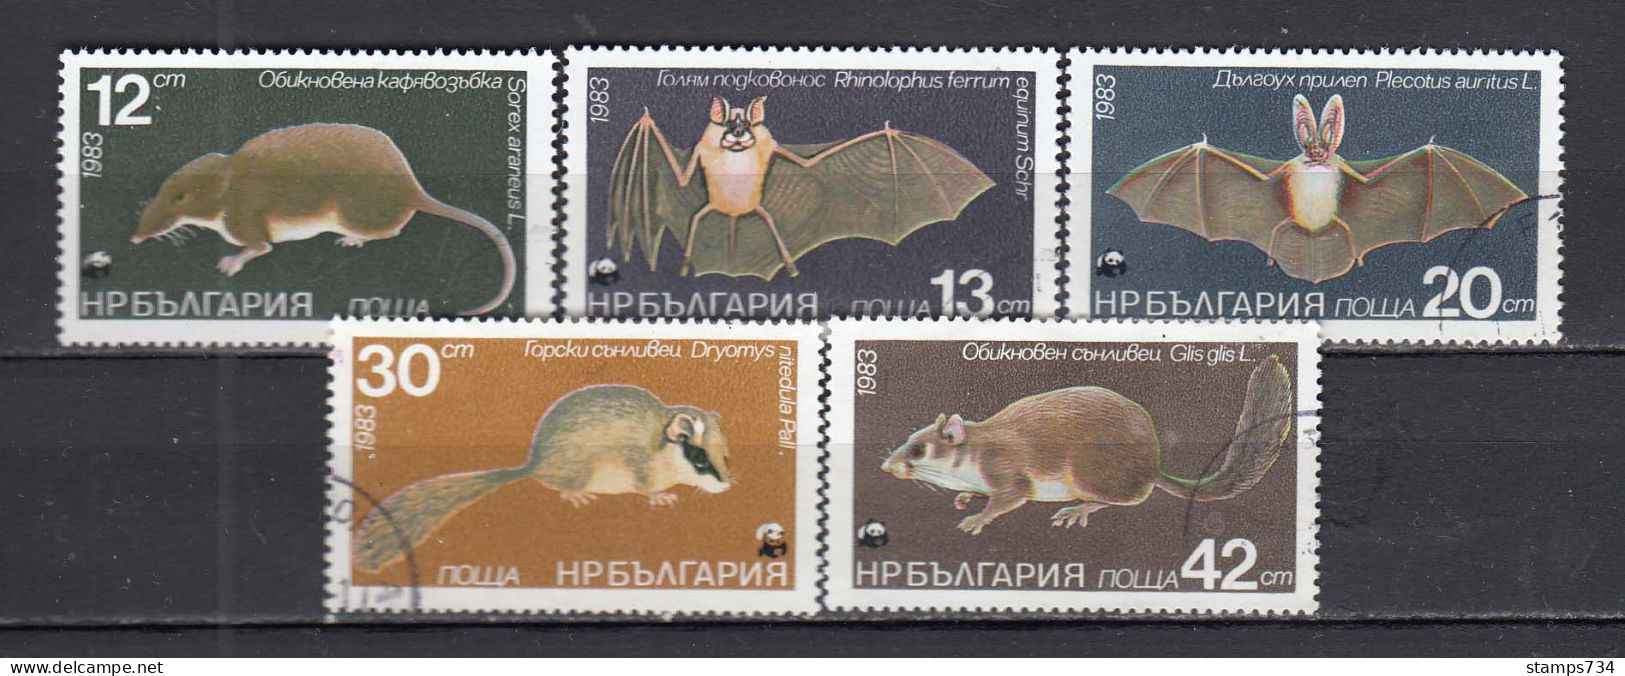 Bulgaria 1983 - WWF: Protected Mammals, Mi-Nr. 3236/40, Used - Oblitérés